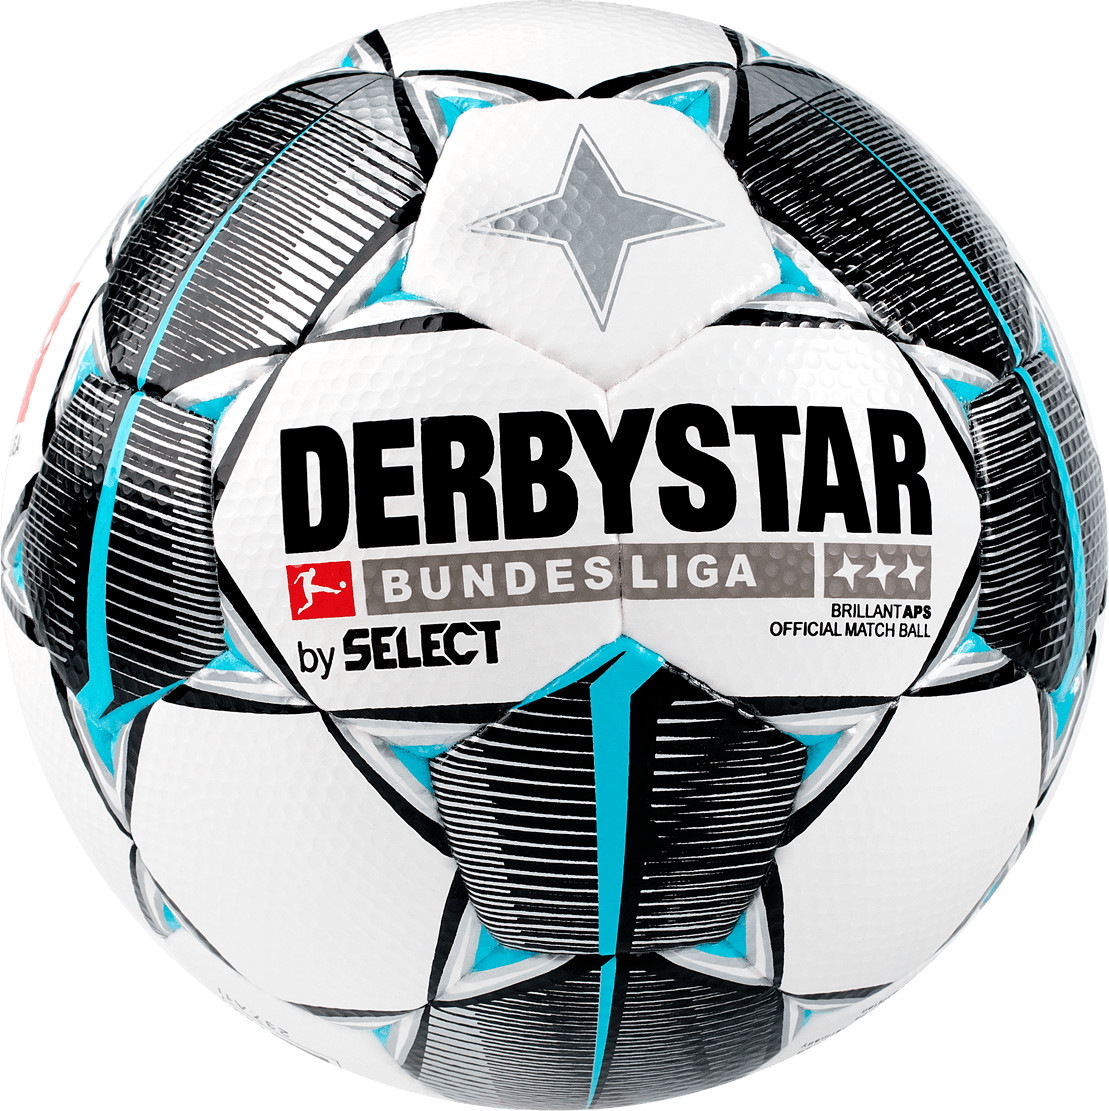 Derbystar Brillant APS ab (1802500019) bei € OMB 139,95 Preisvergleich | 2019/20